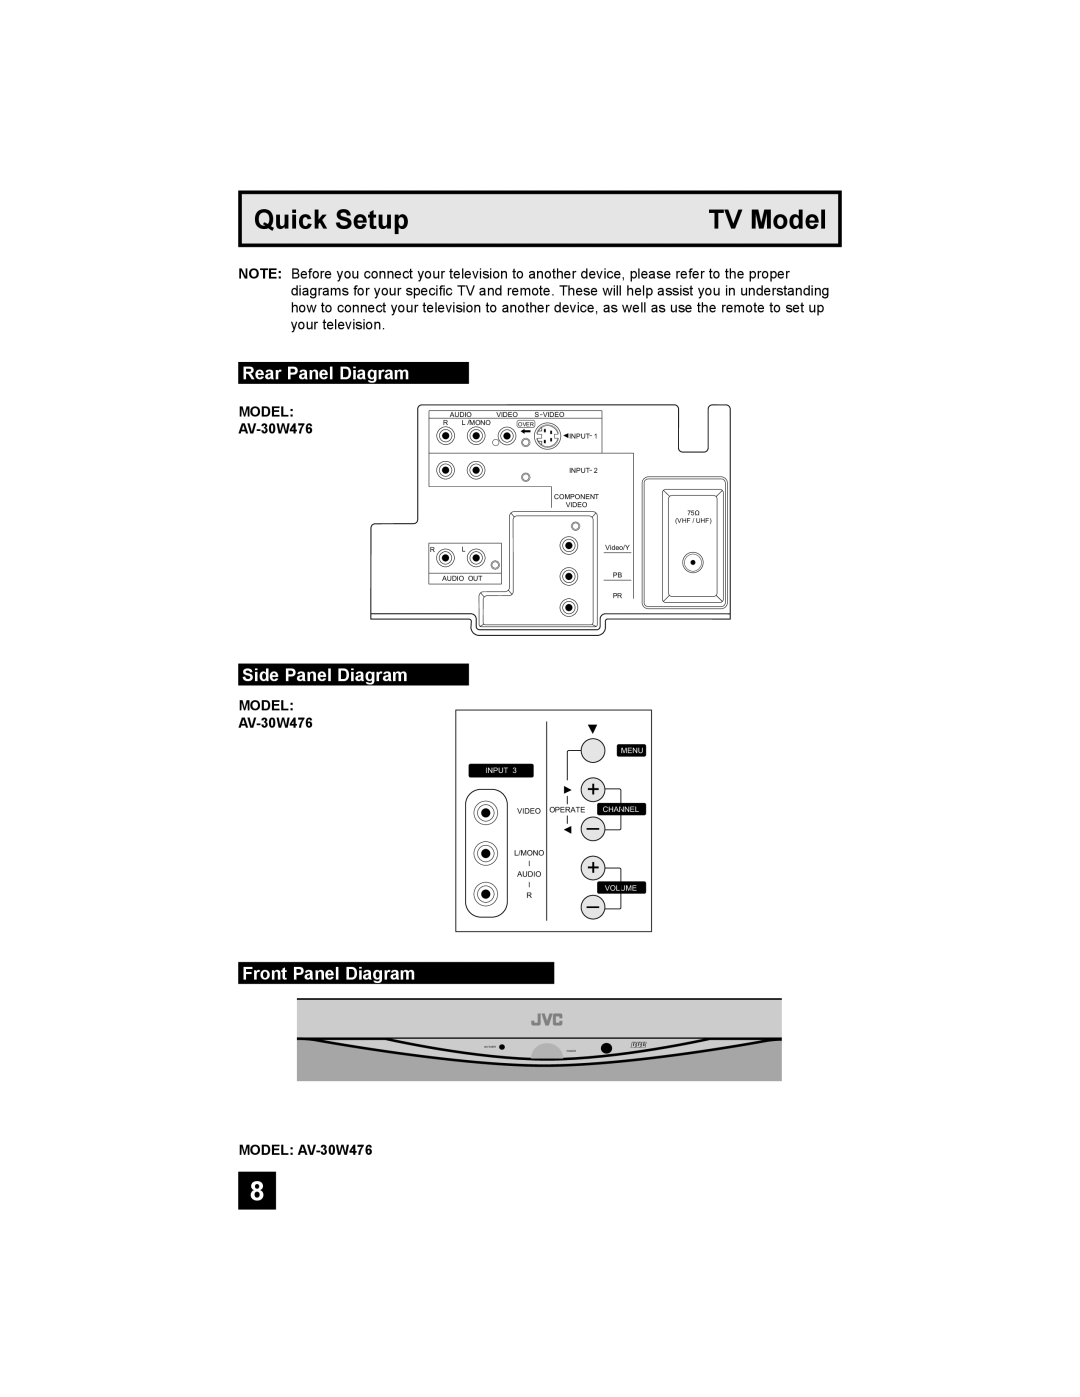 JVC AV 30W476 manual TV Model, Rear Panel Diagram, Side Panel Diagram, Front Panel Diagram, Quick Setup 